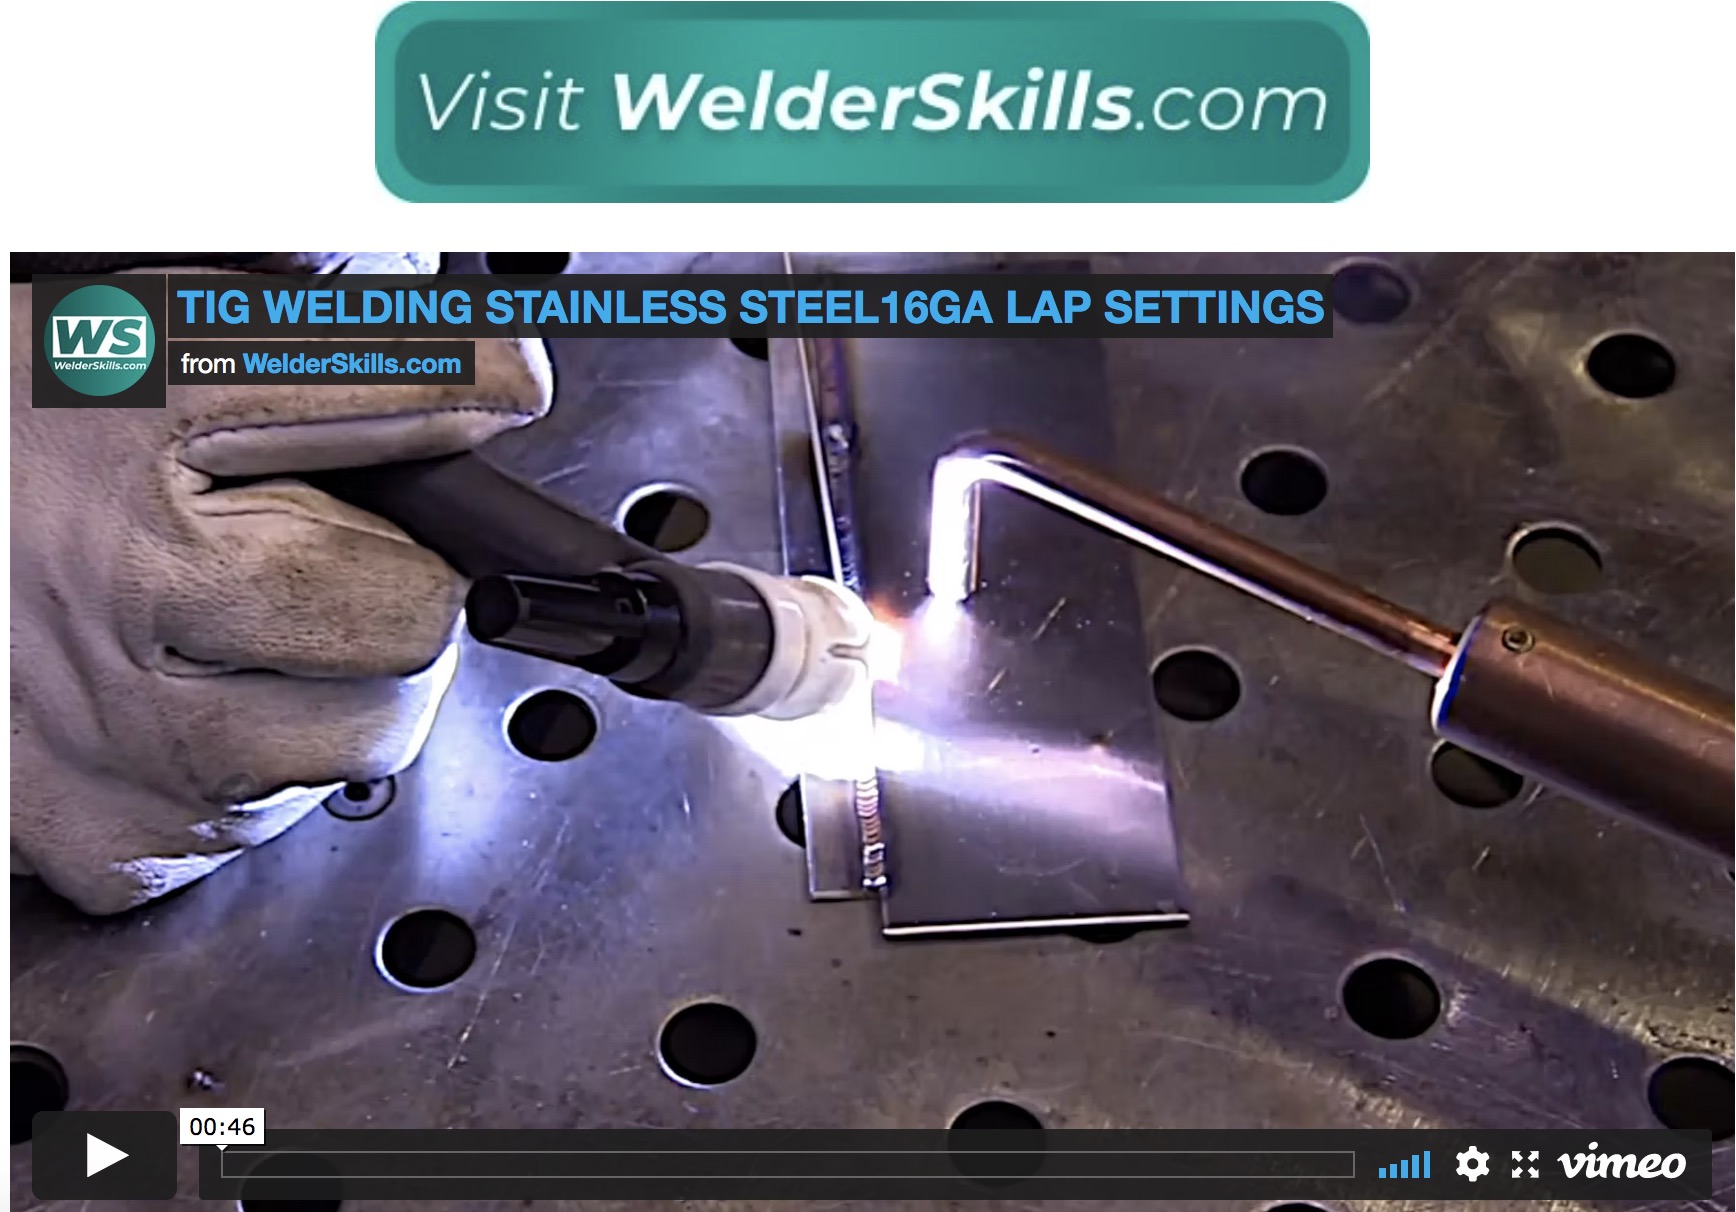 tig welding stainless